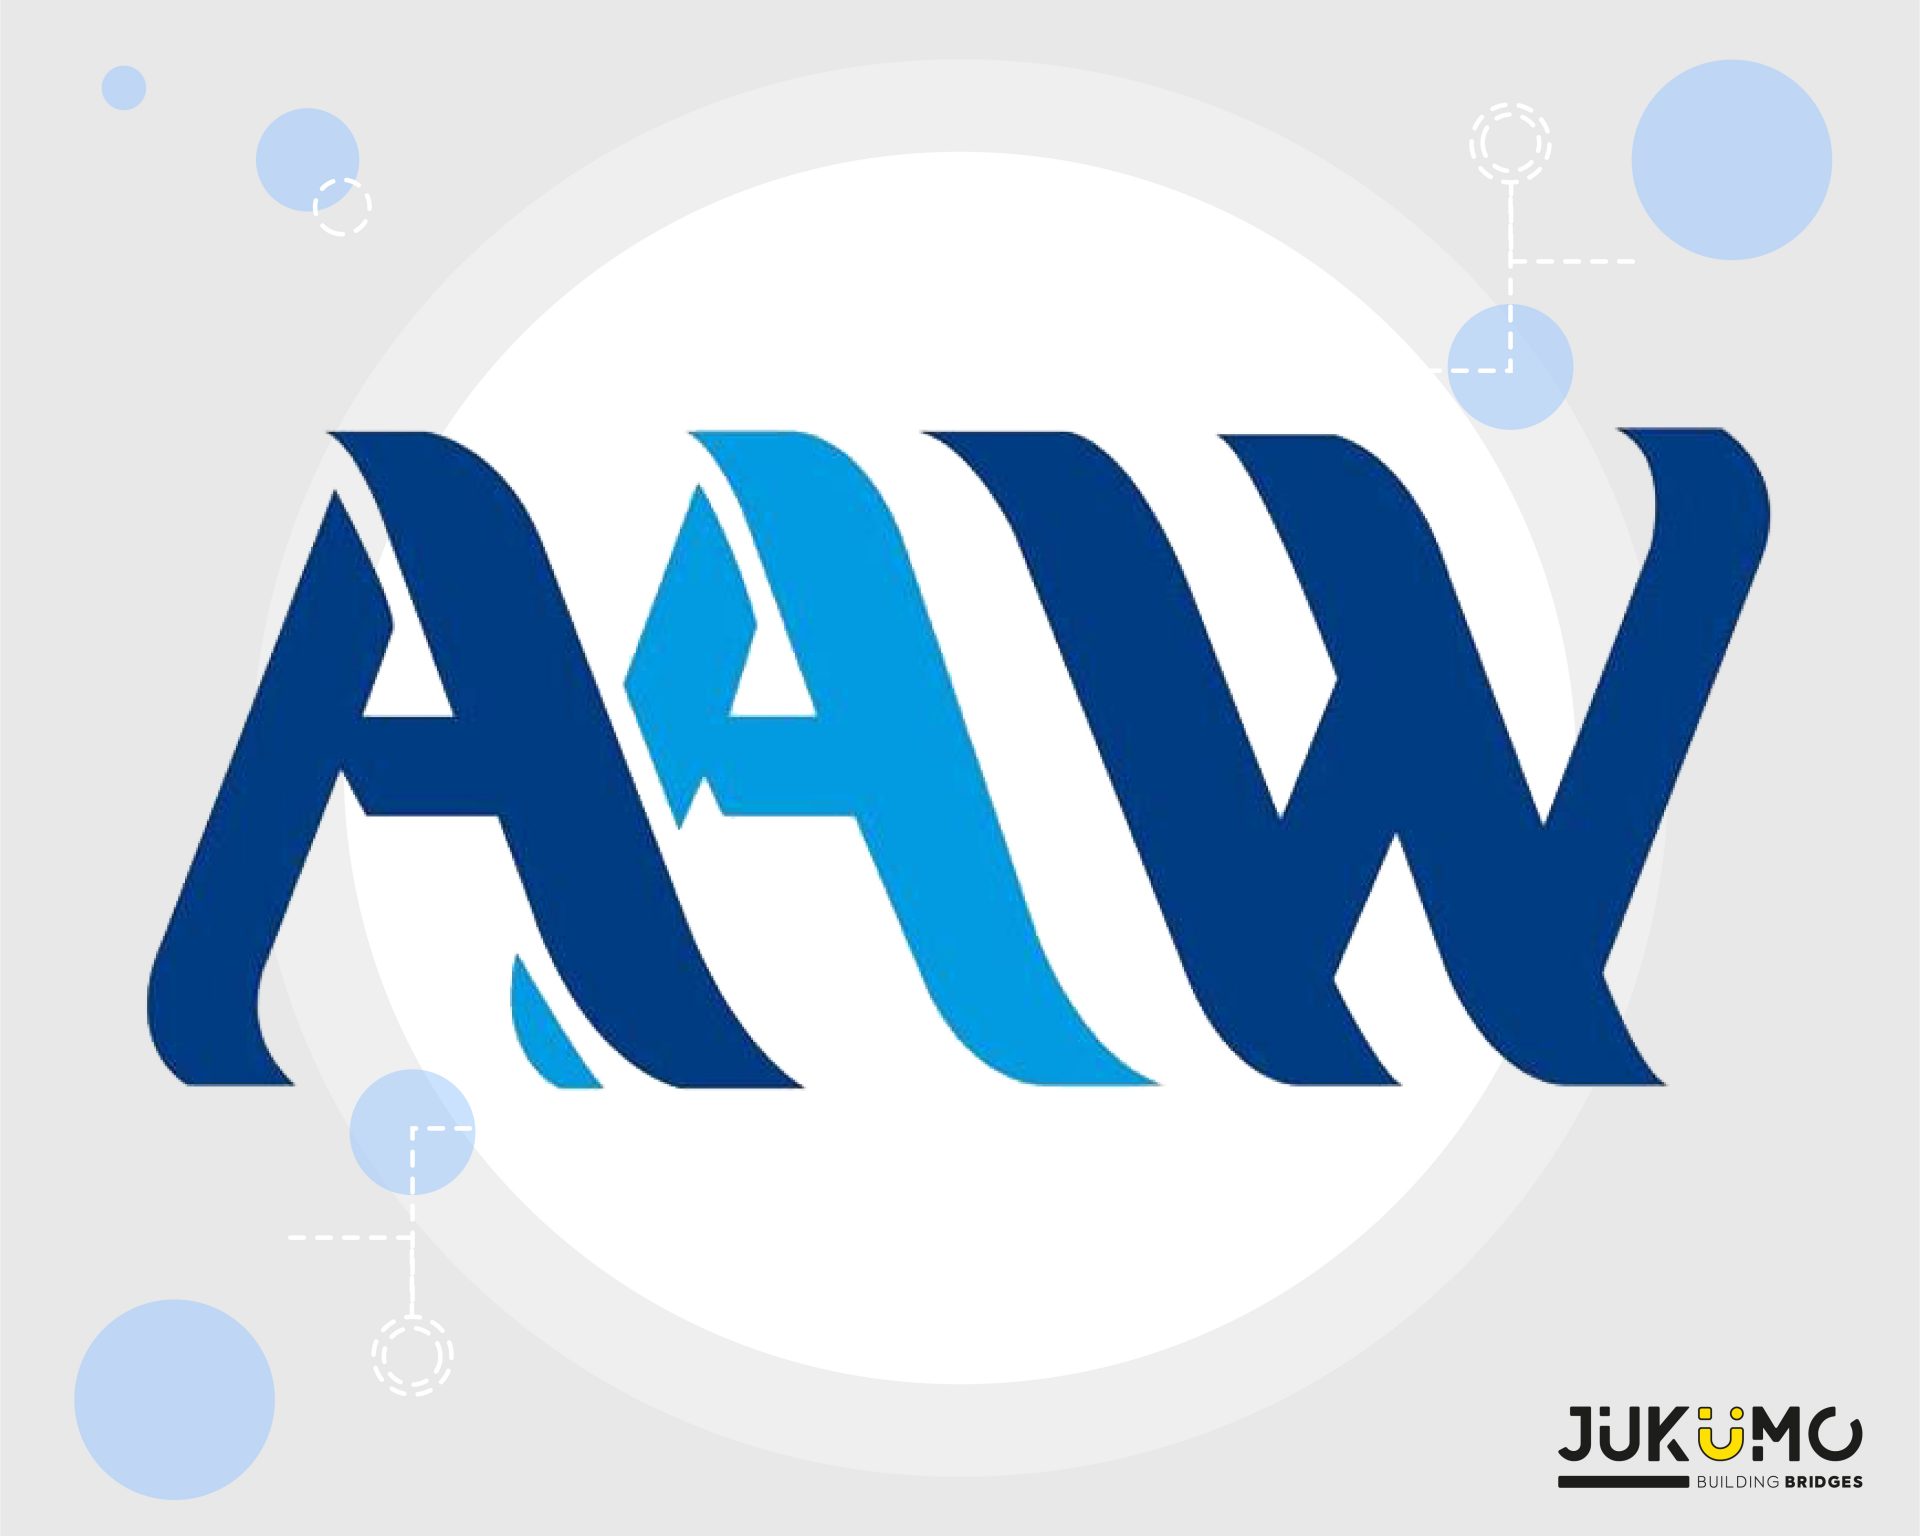 AAW Consulting Engineers Jukumo Advertising